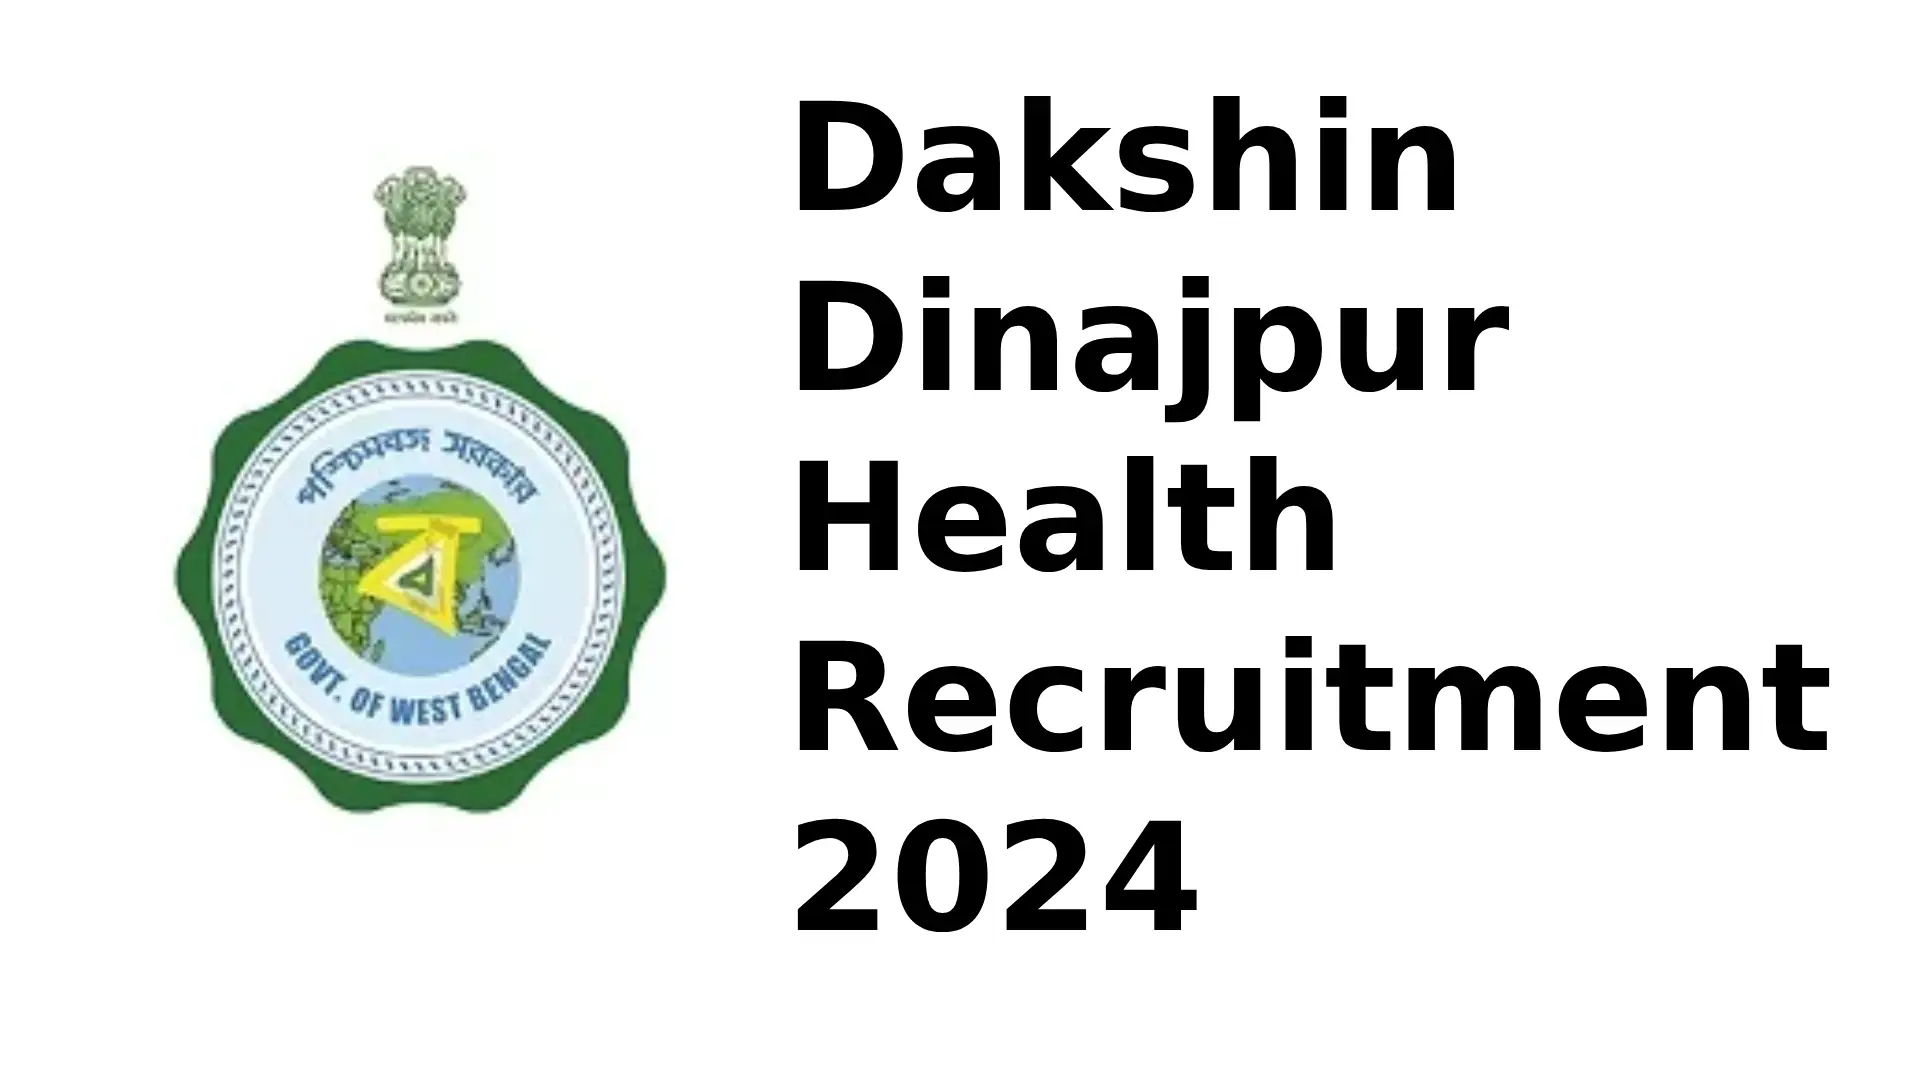 Dakshin Dinajpur Health Recruitment